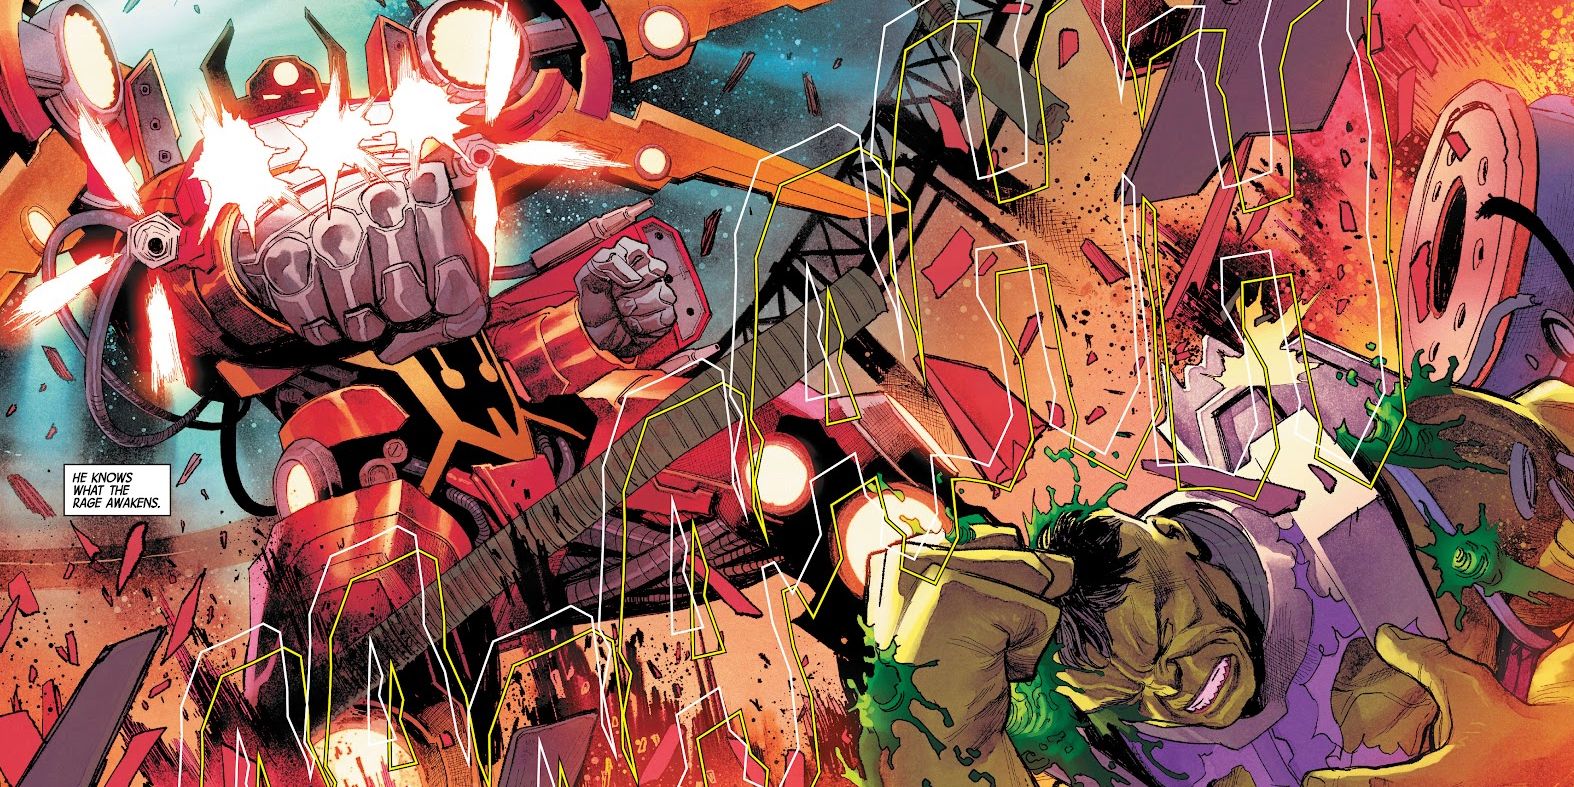 A Celestial-inspired Hulkbuster Iron Man armor firing a full salvo of rockets at a recoiling Hulk.